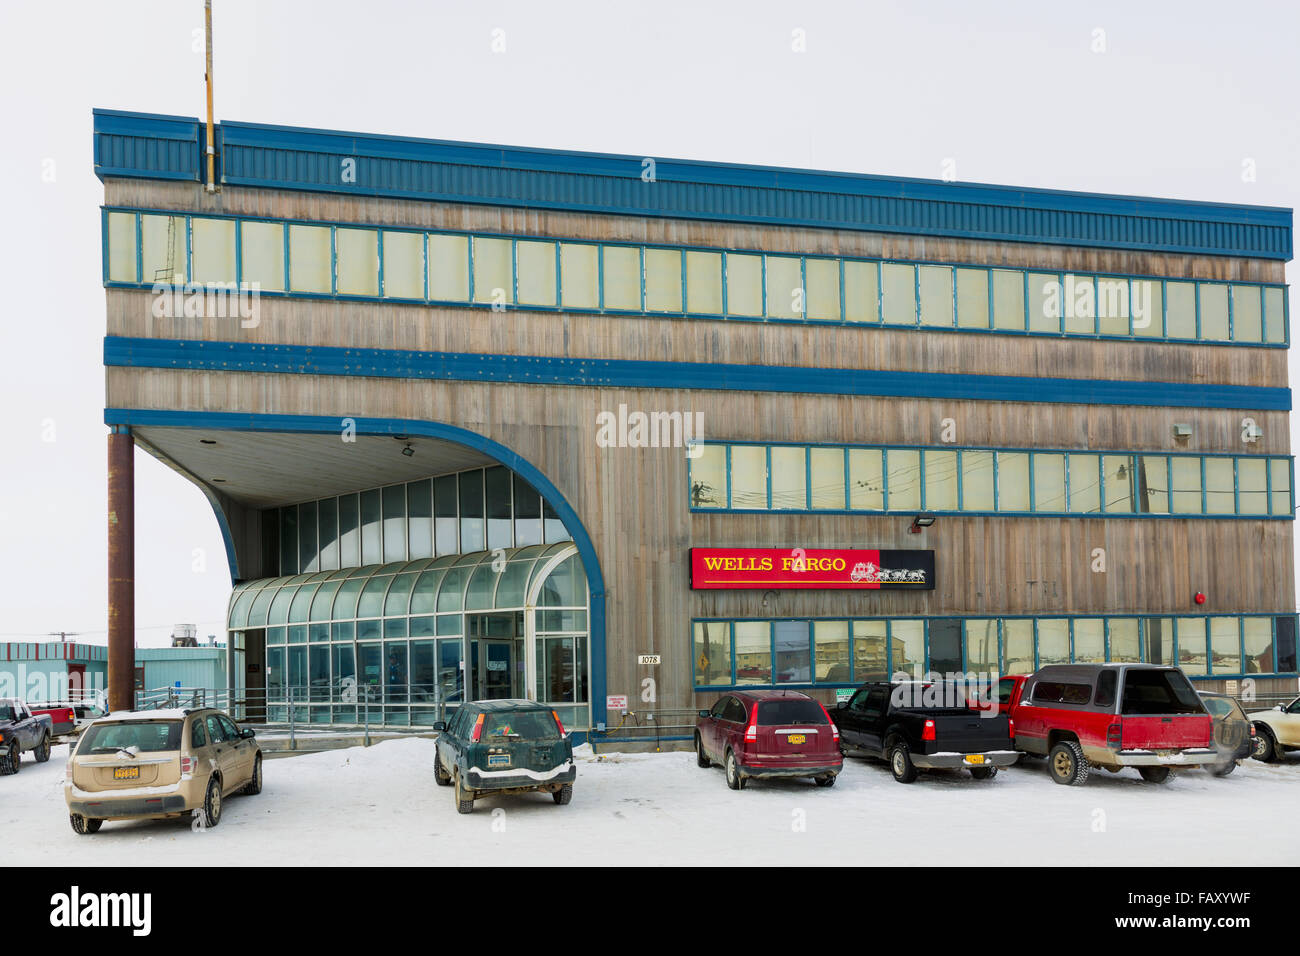 Exterior view of the Wells Fargo Building, Barrow, North Slope, Arctic Alaska, USA, Winter Stock Photo